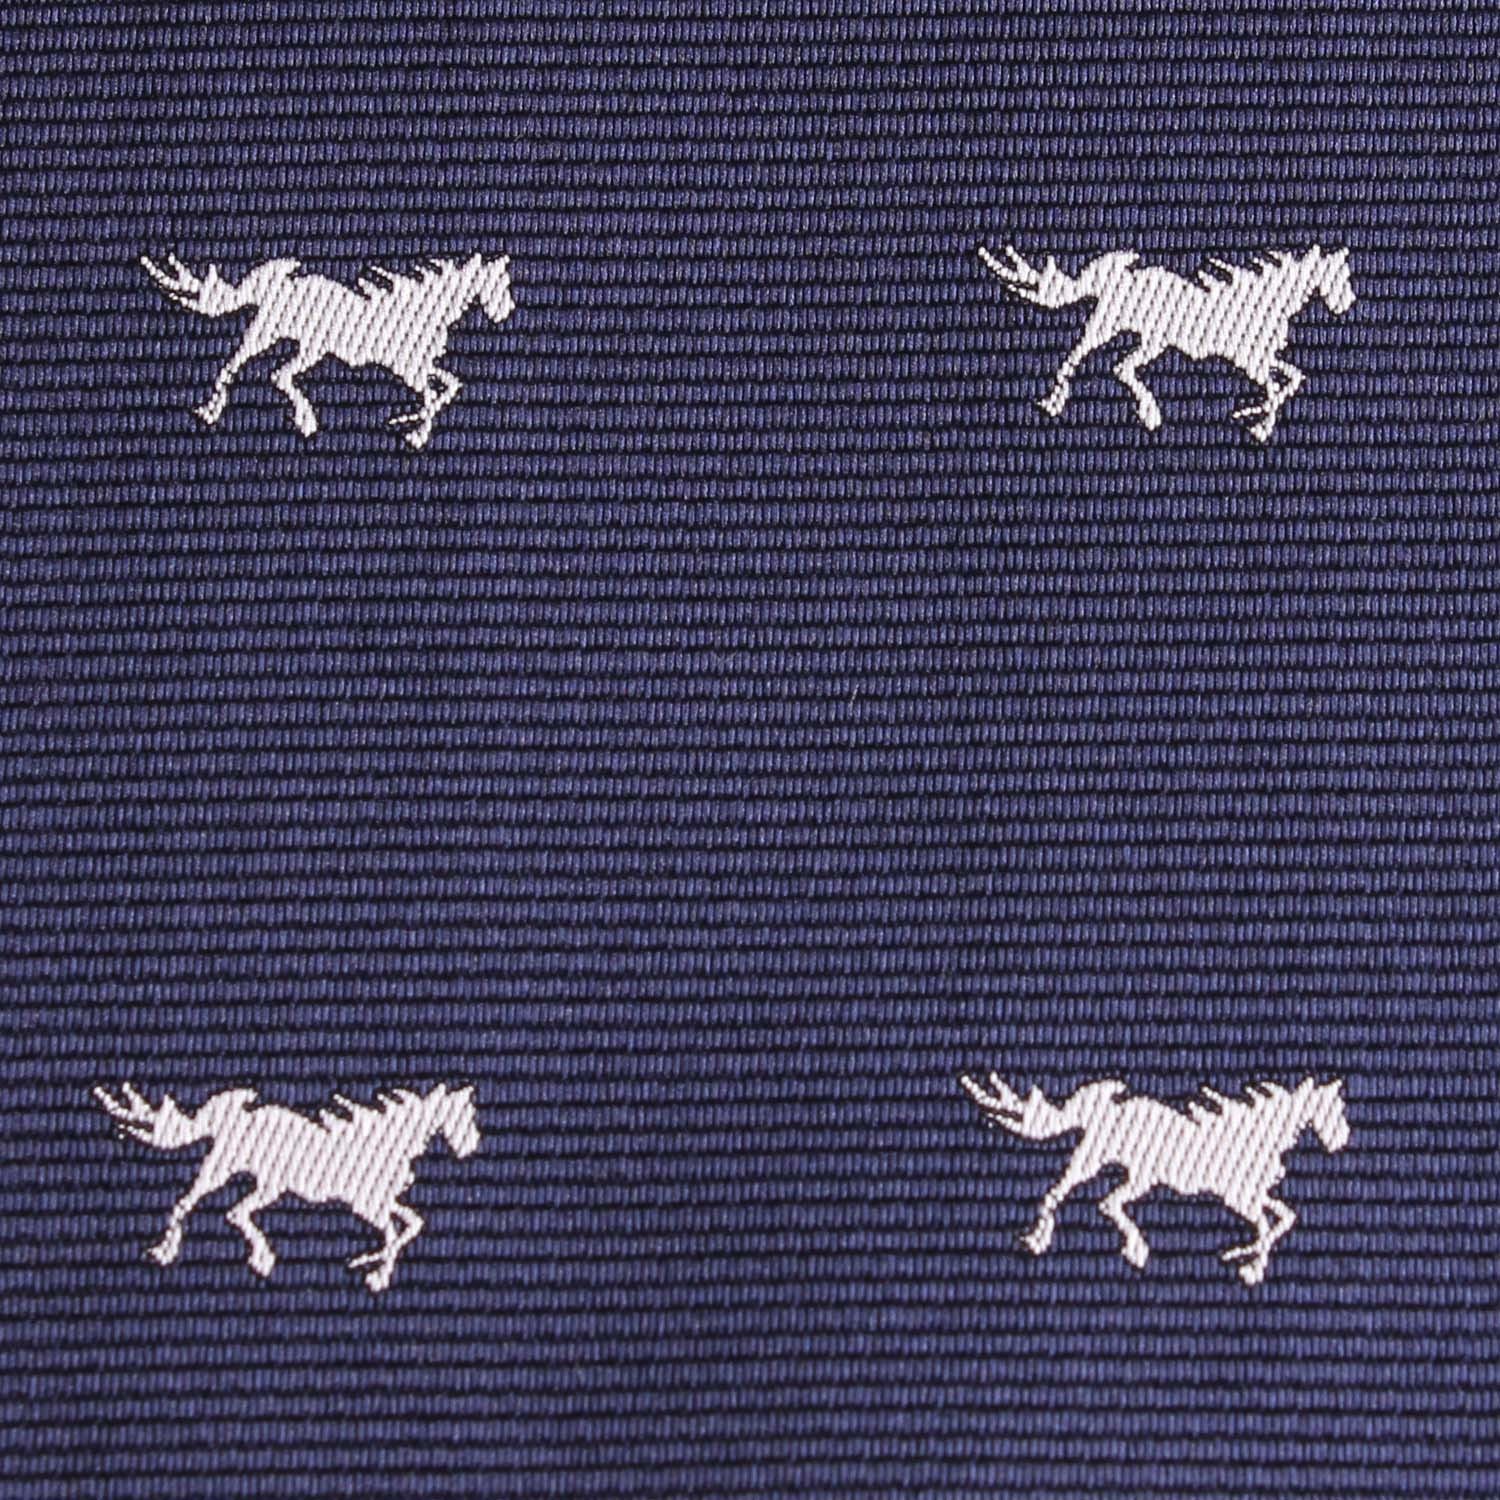 Navy Blue Race Horse Fabric Kids Bow Tie M106